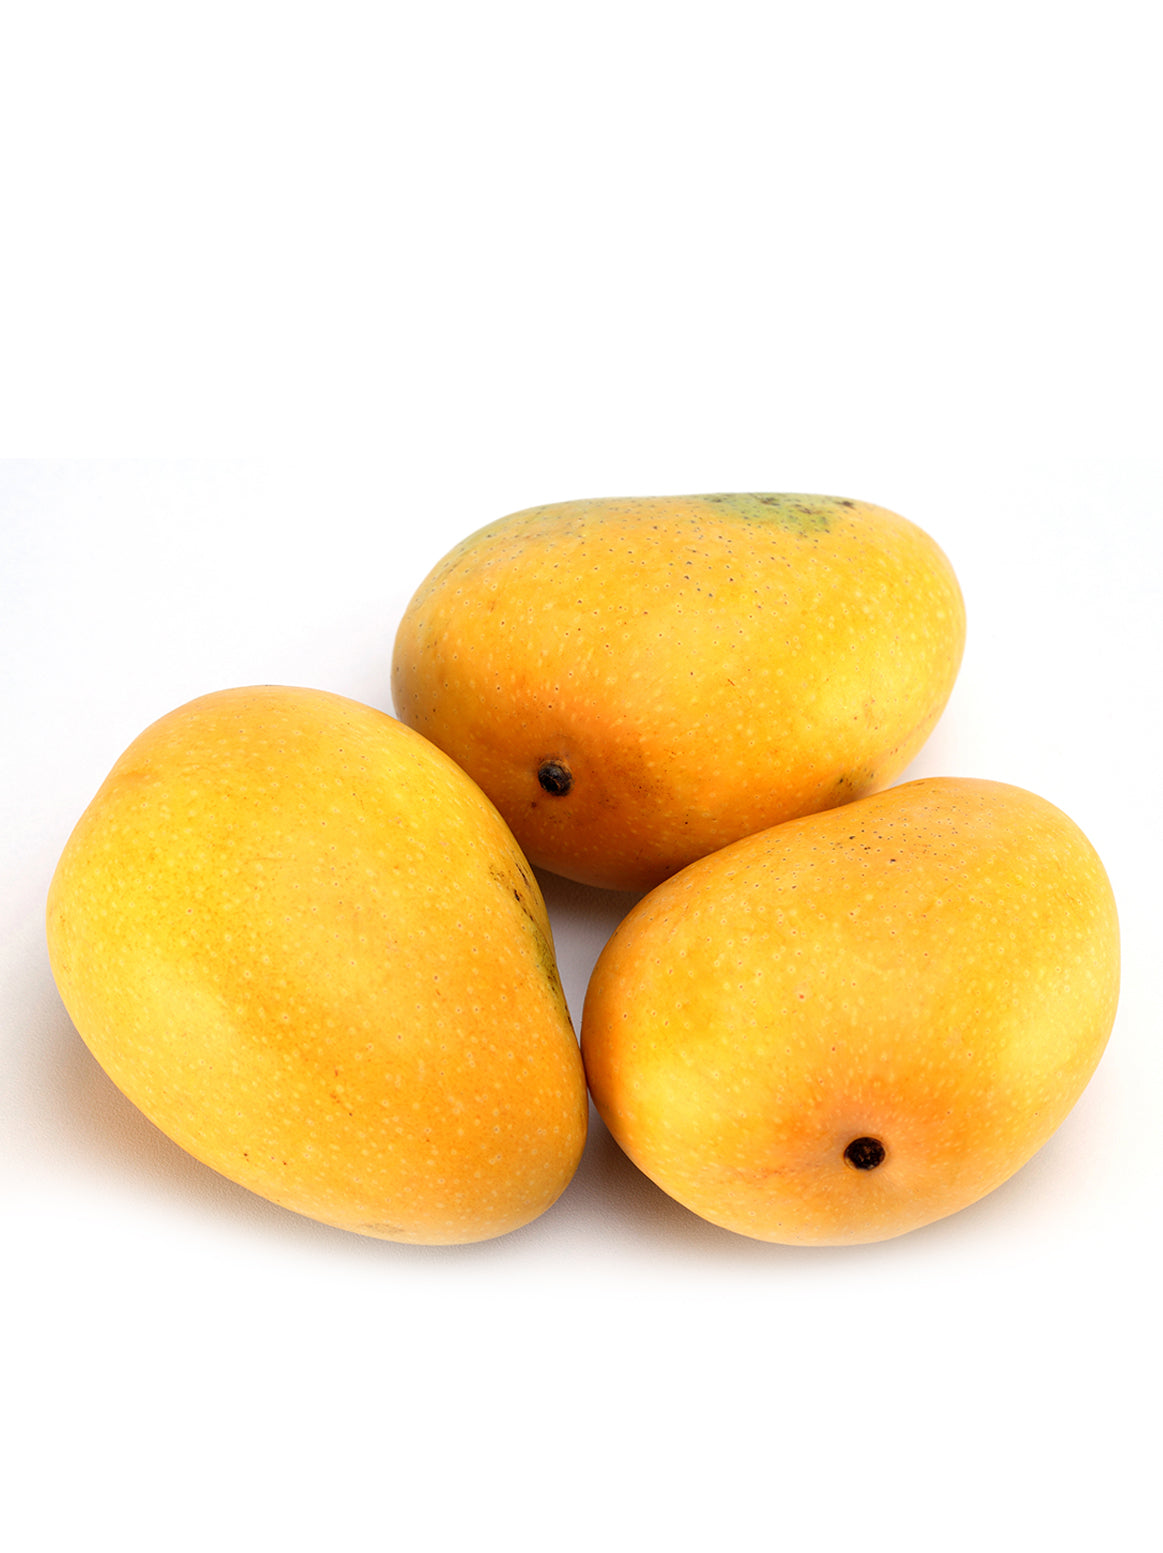 Mangoes - 1 Piece